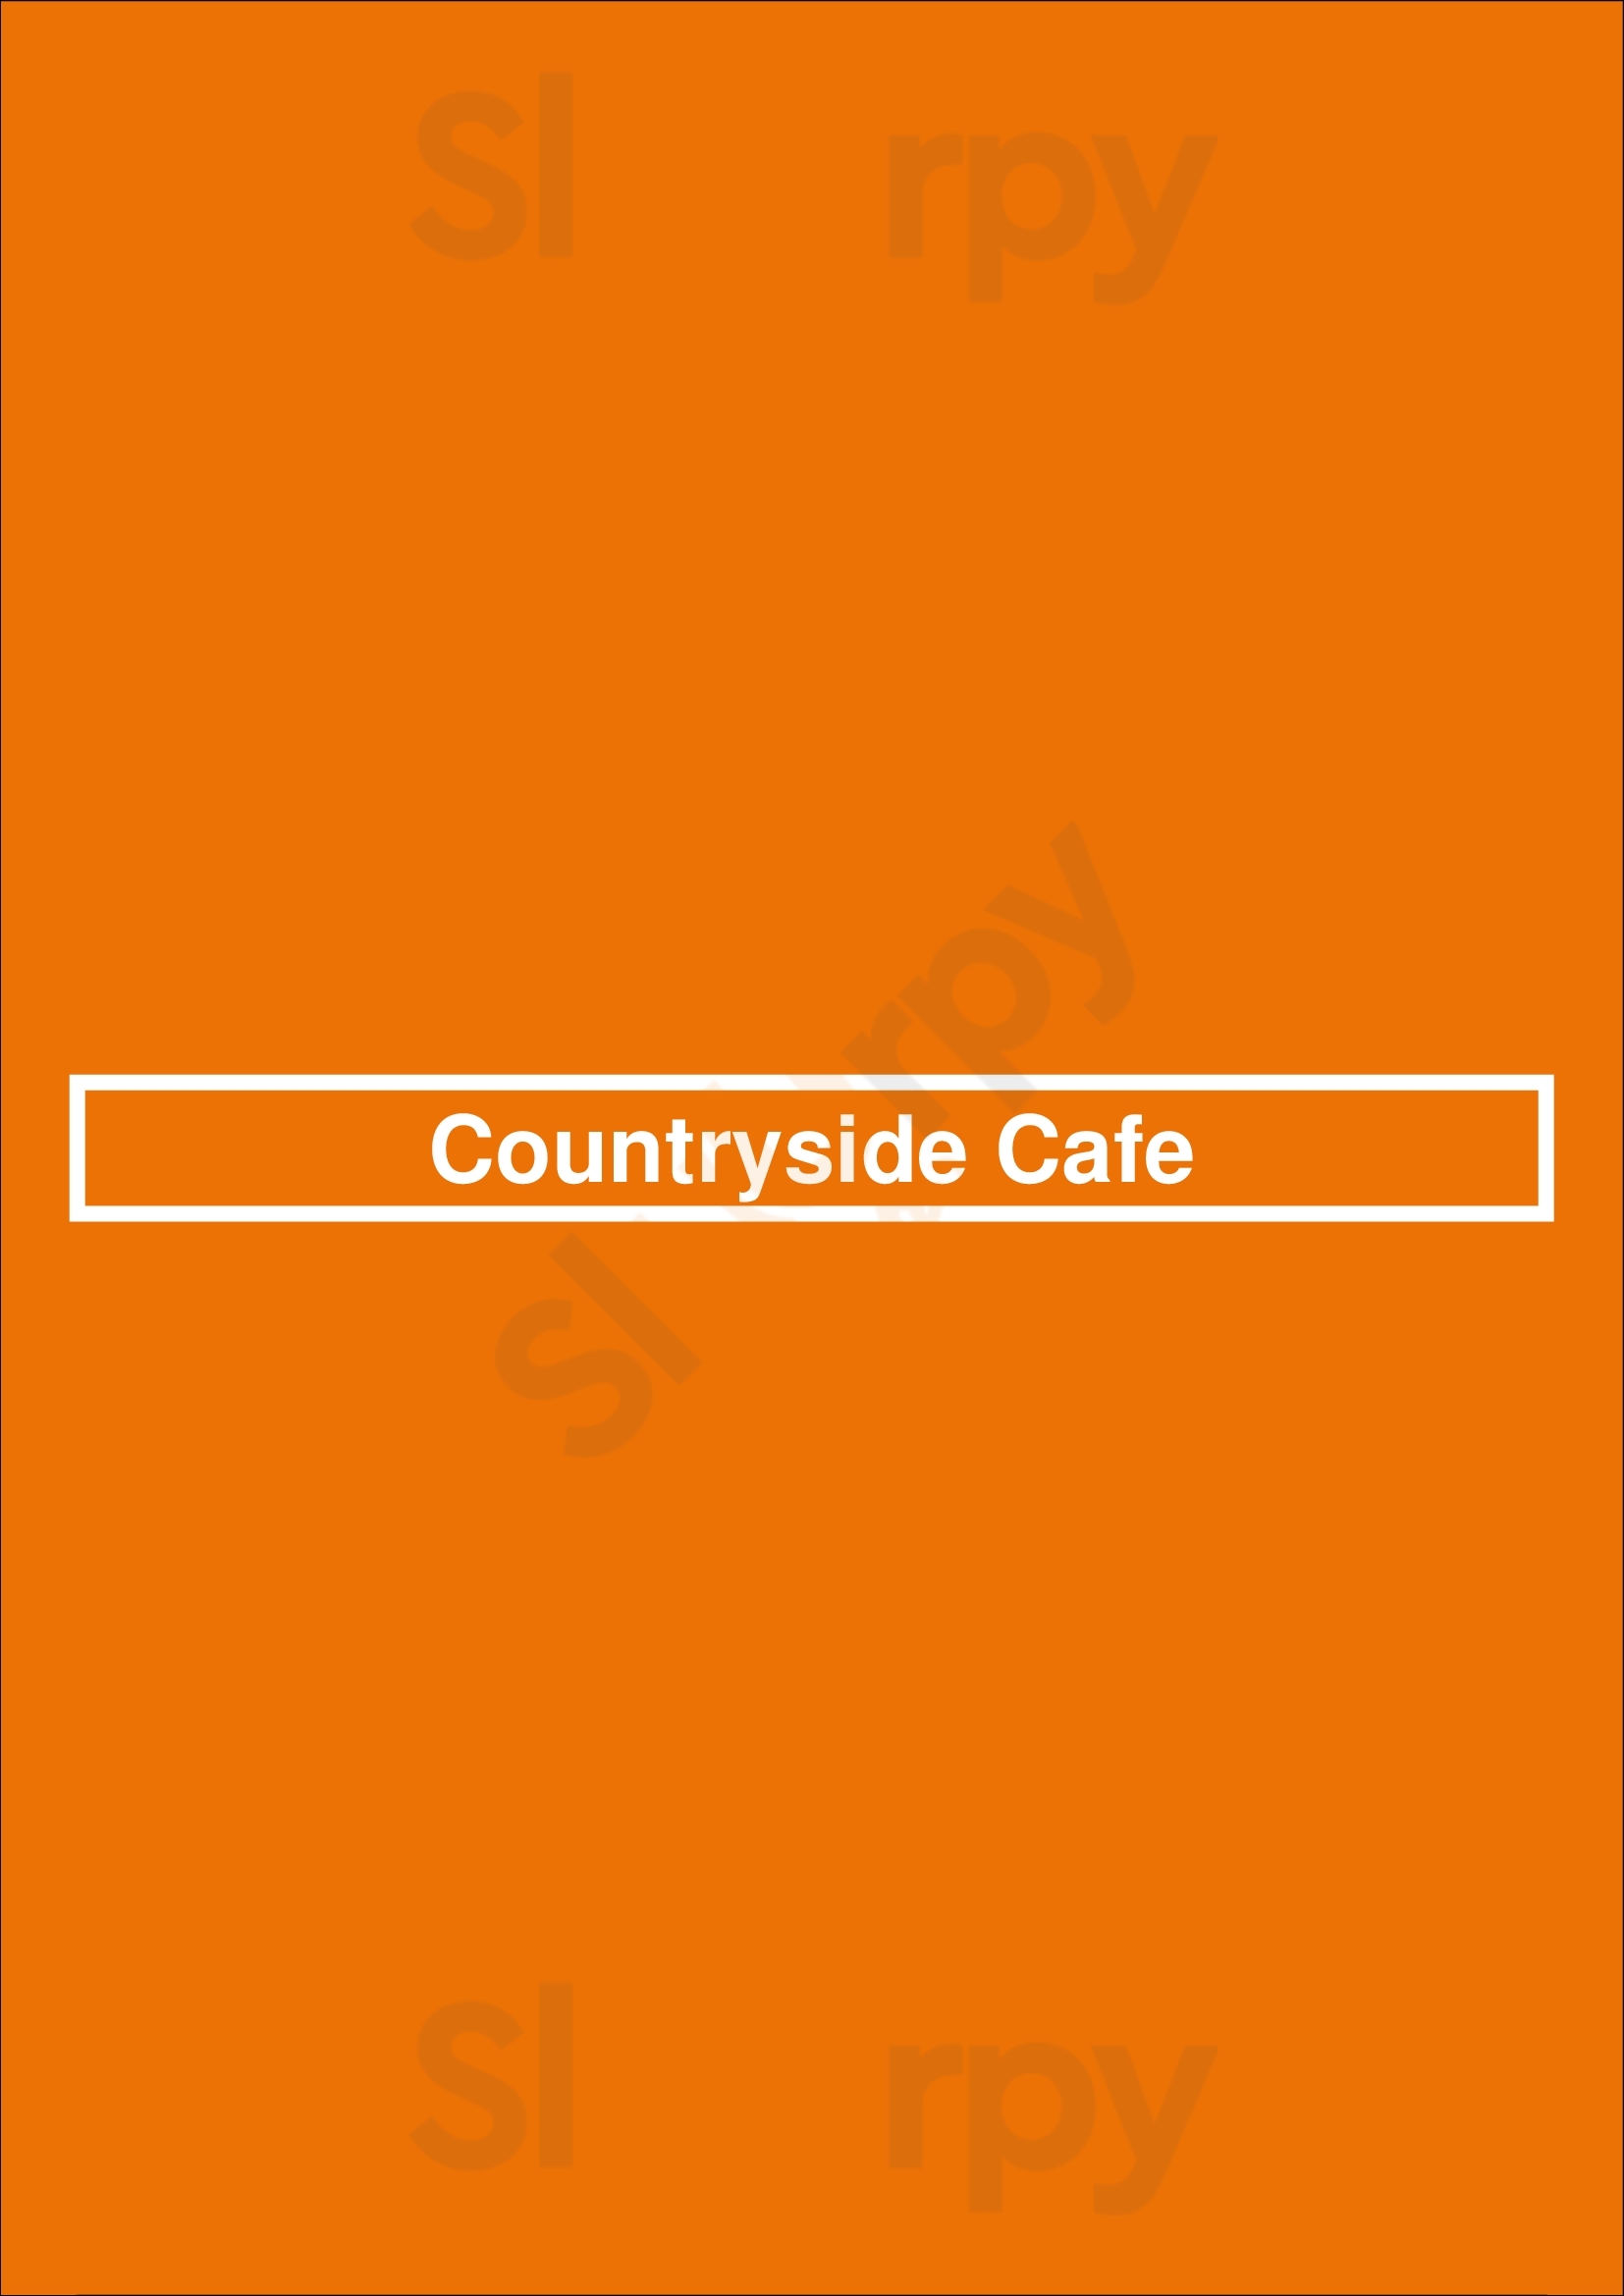 Countryside Cafe Burien Menu - 1